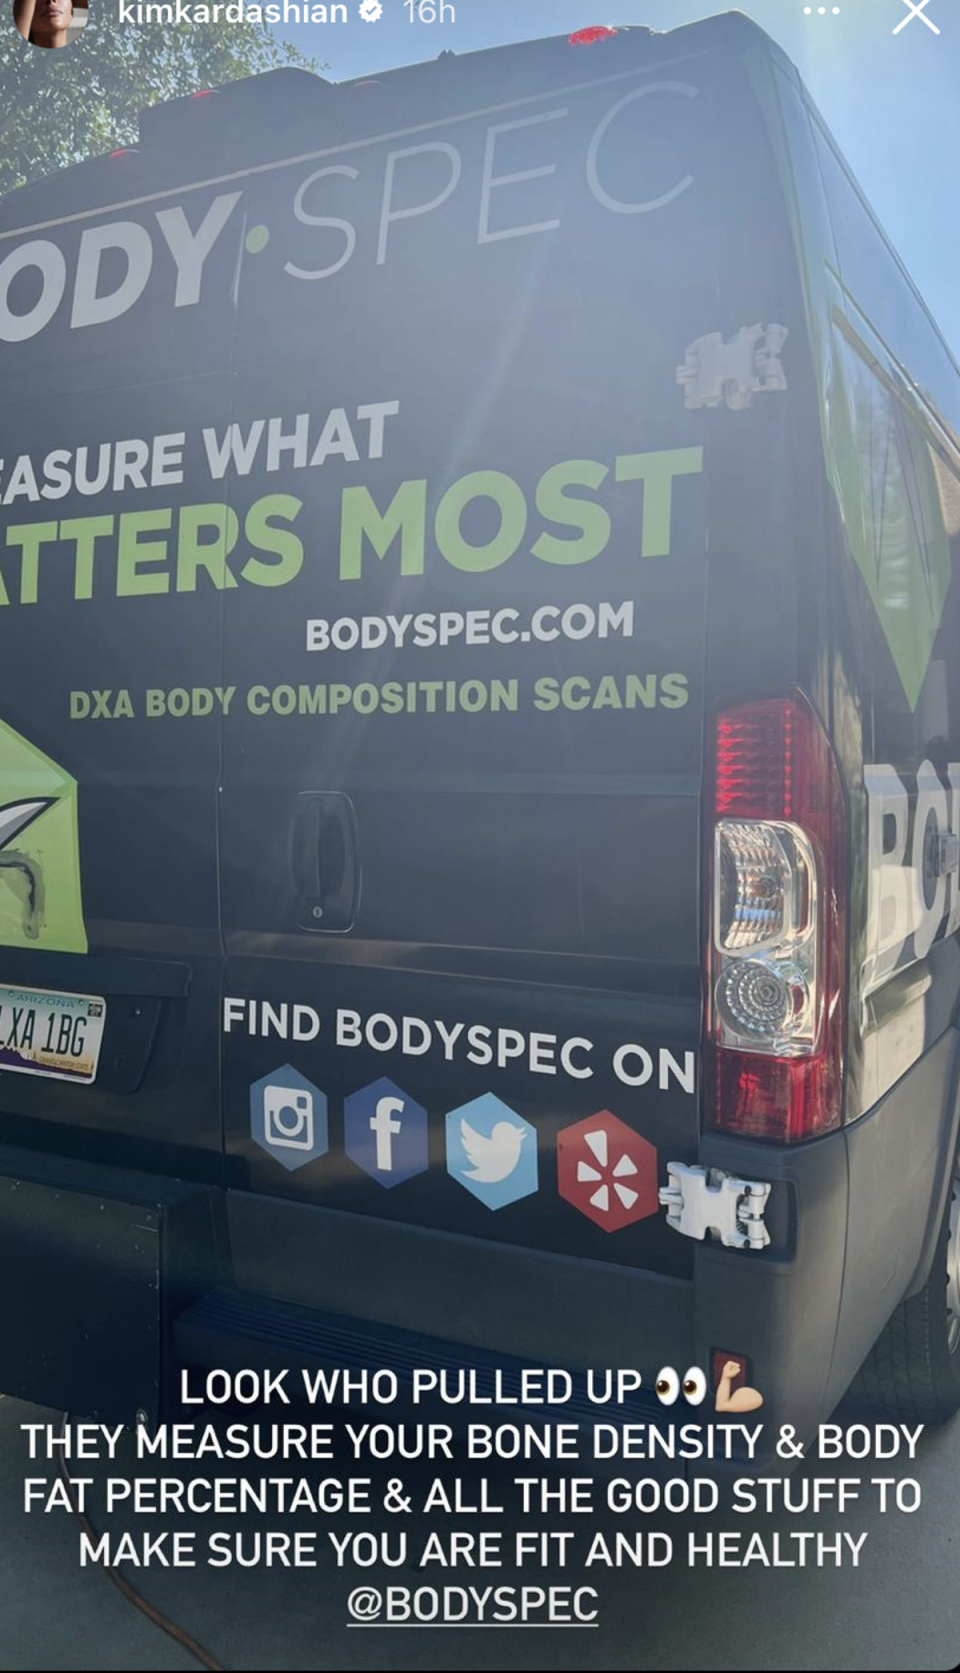 La camioneta de BodySpec que Kardashian mostró en sus historias (kimkardashian/Instagram)